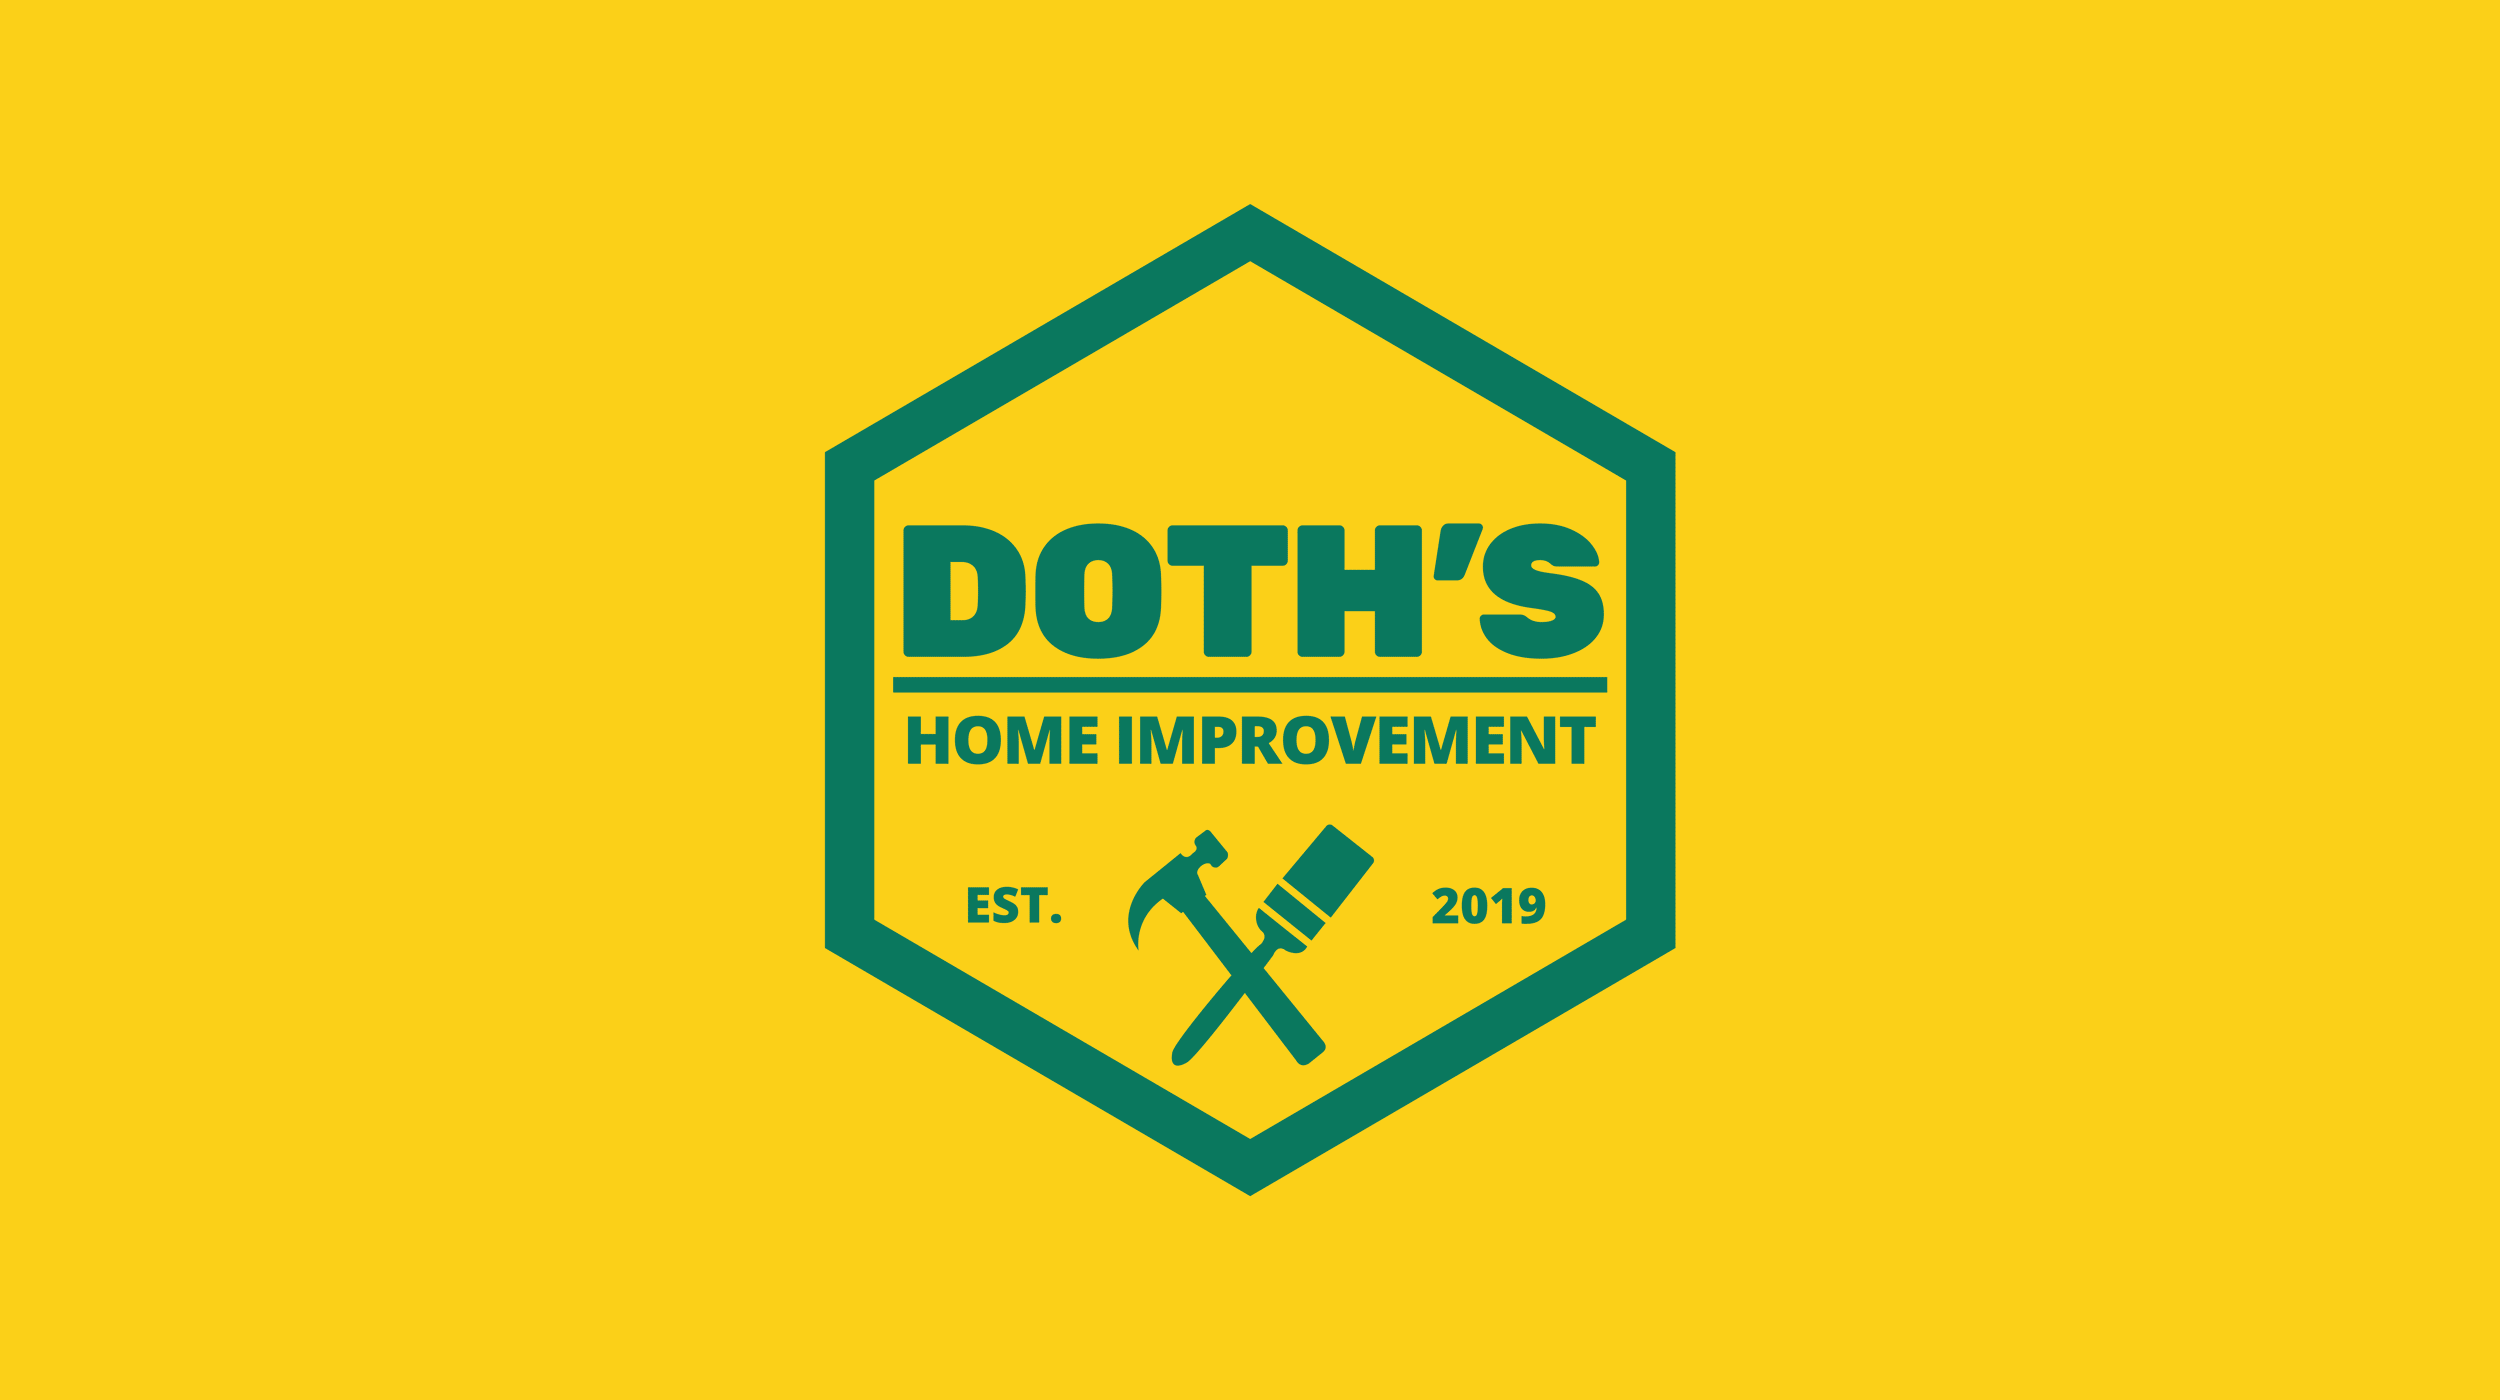 DOTHs home improvement logo